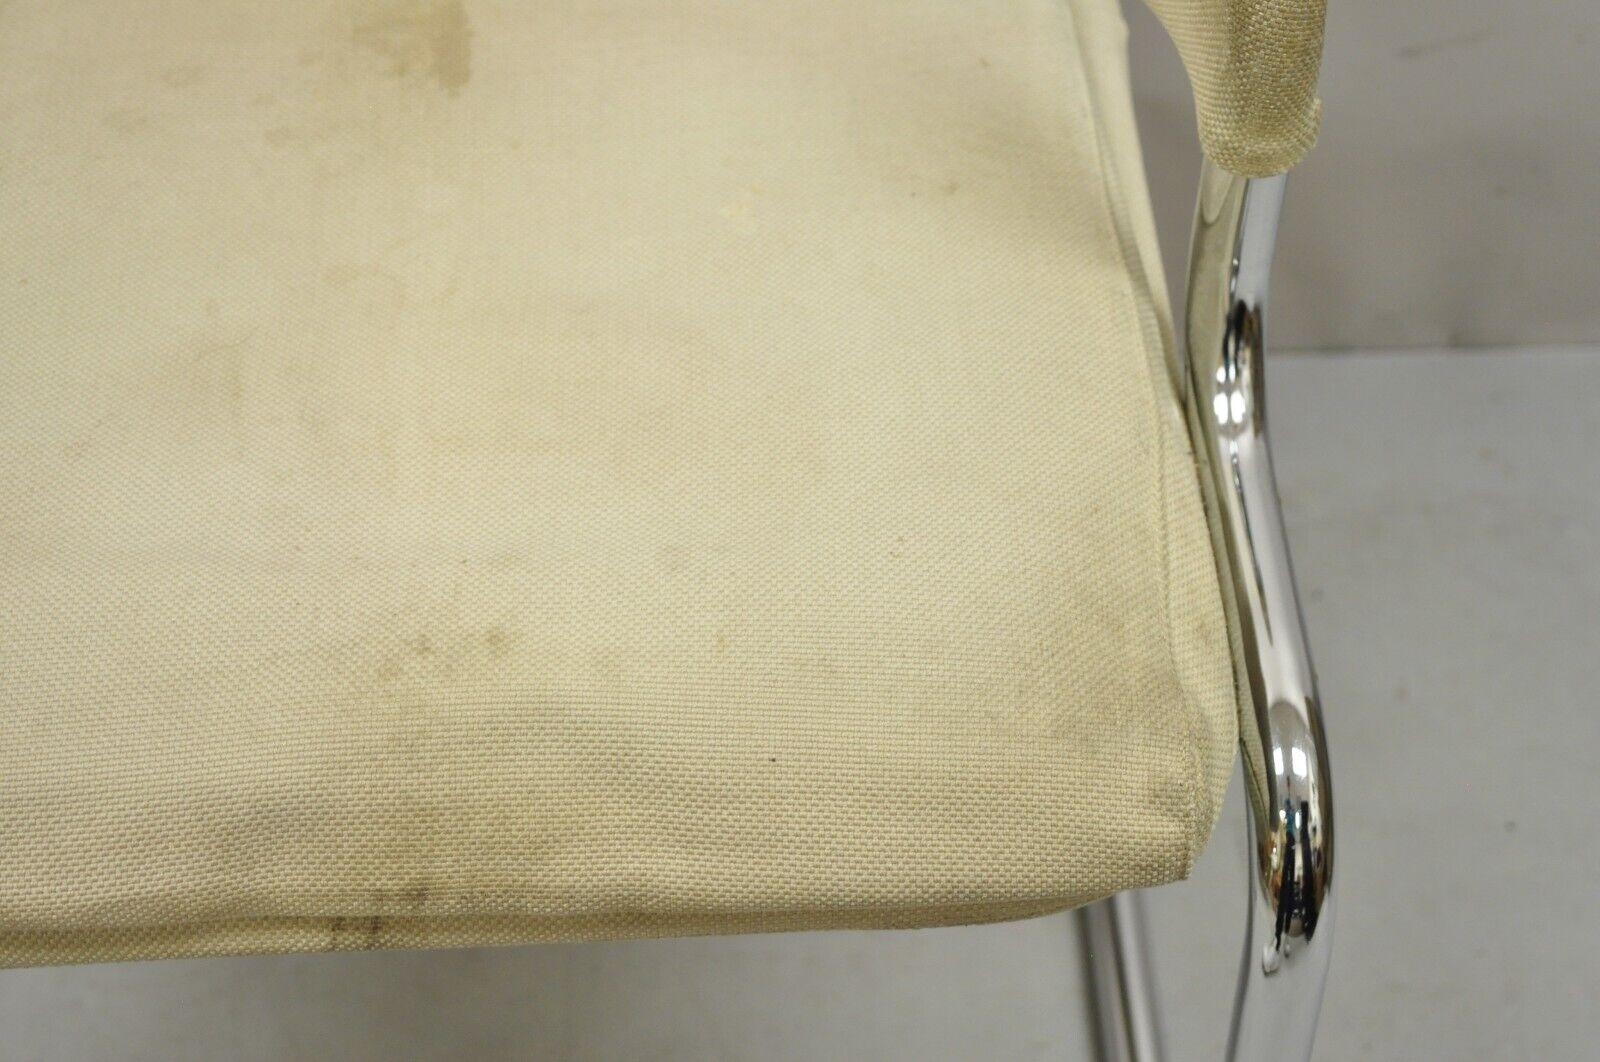 Vintage Mid-Century Modern Tubular Chrome Arm Chair with Burlap Seat For Sale 3